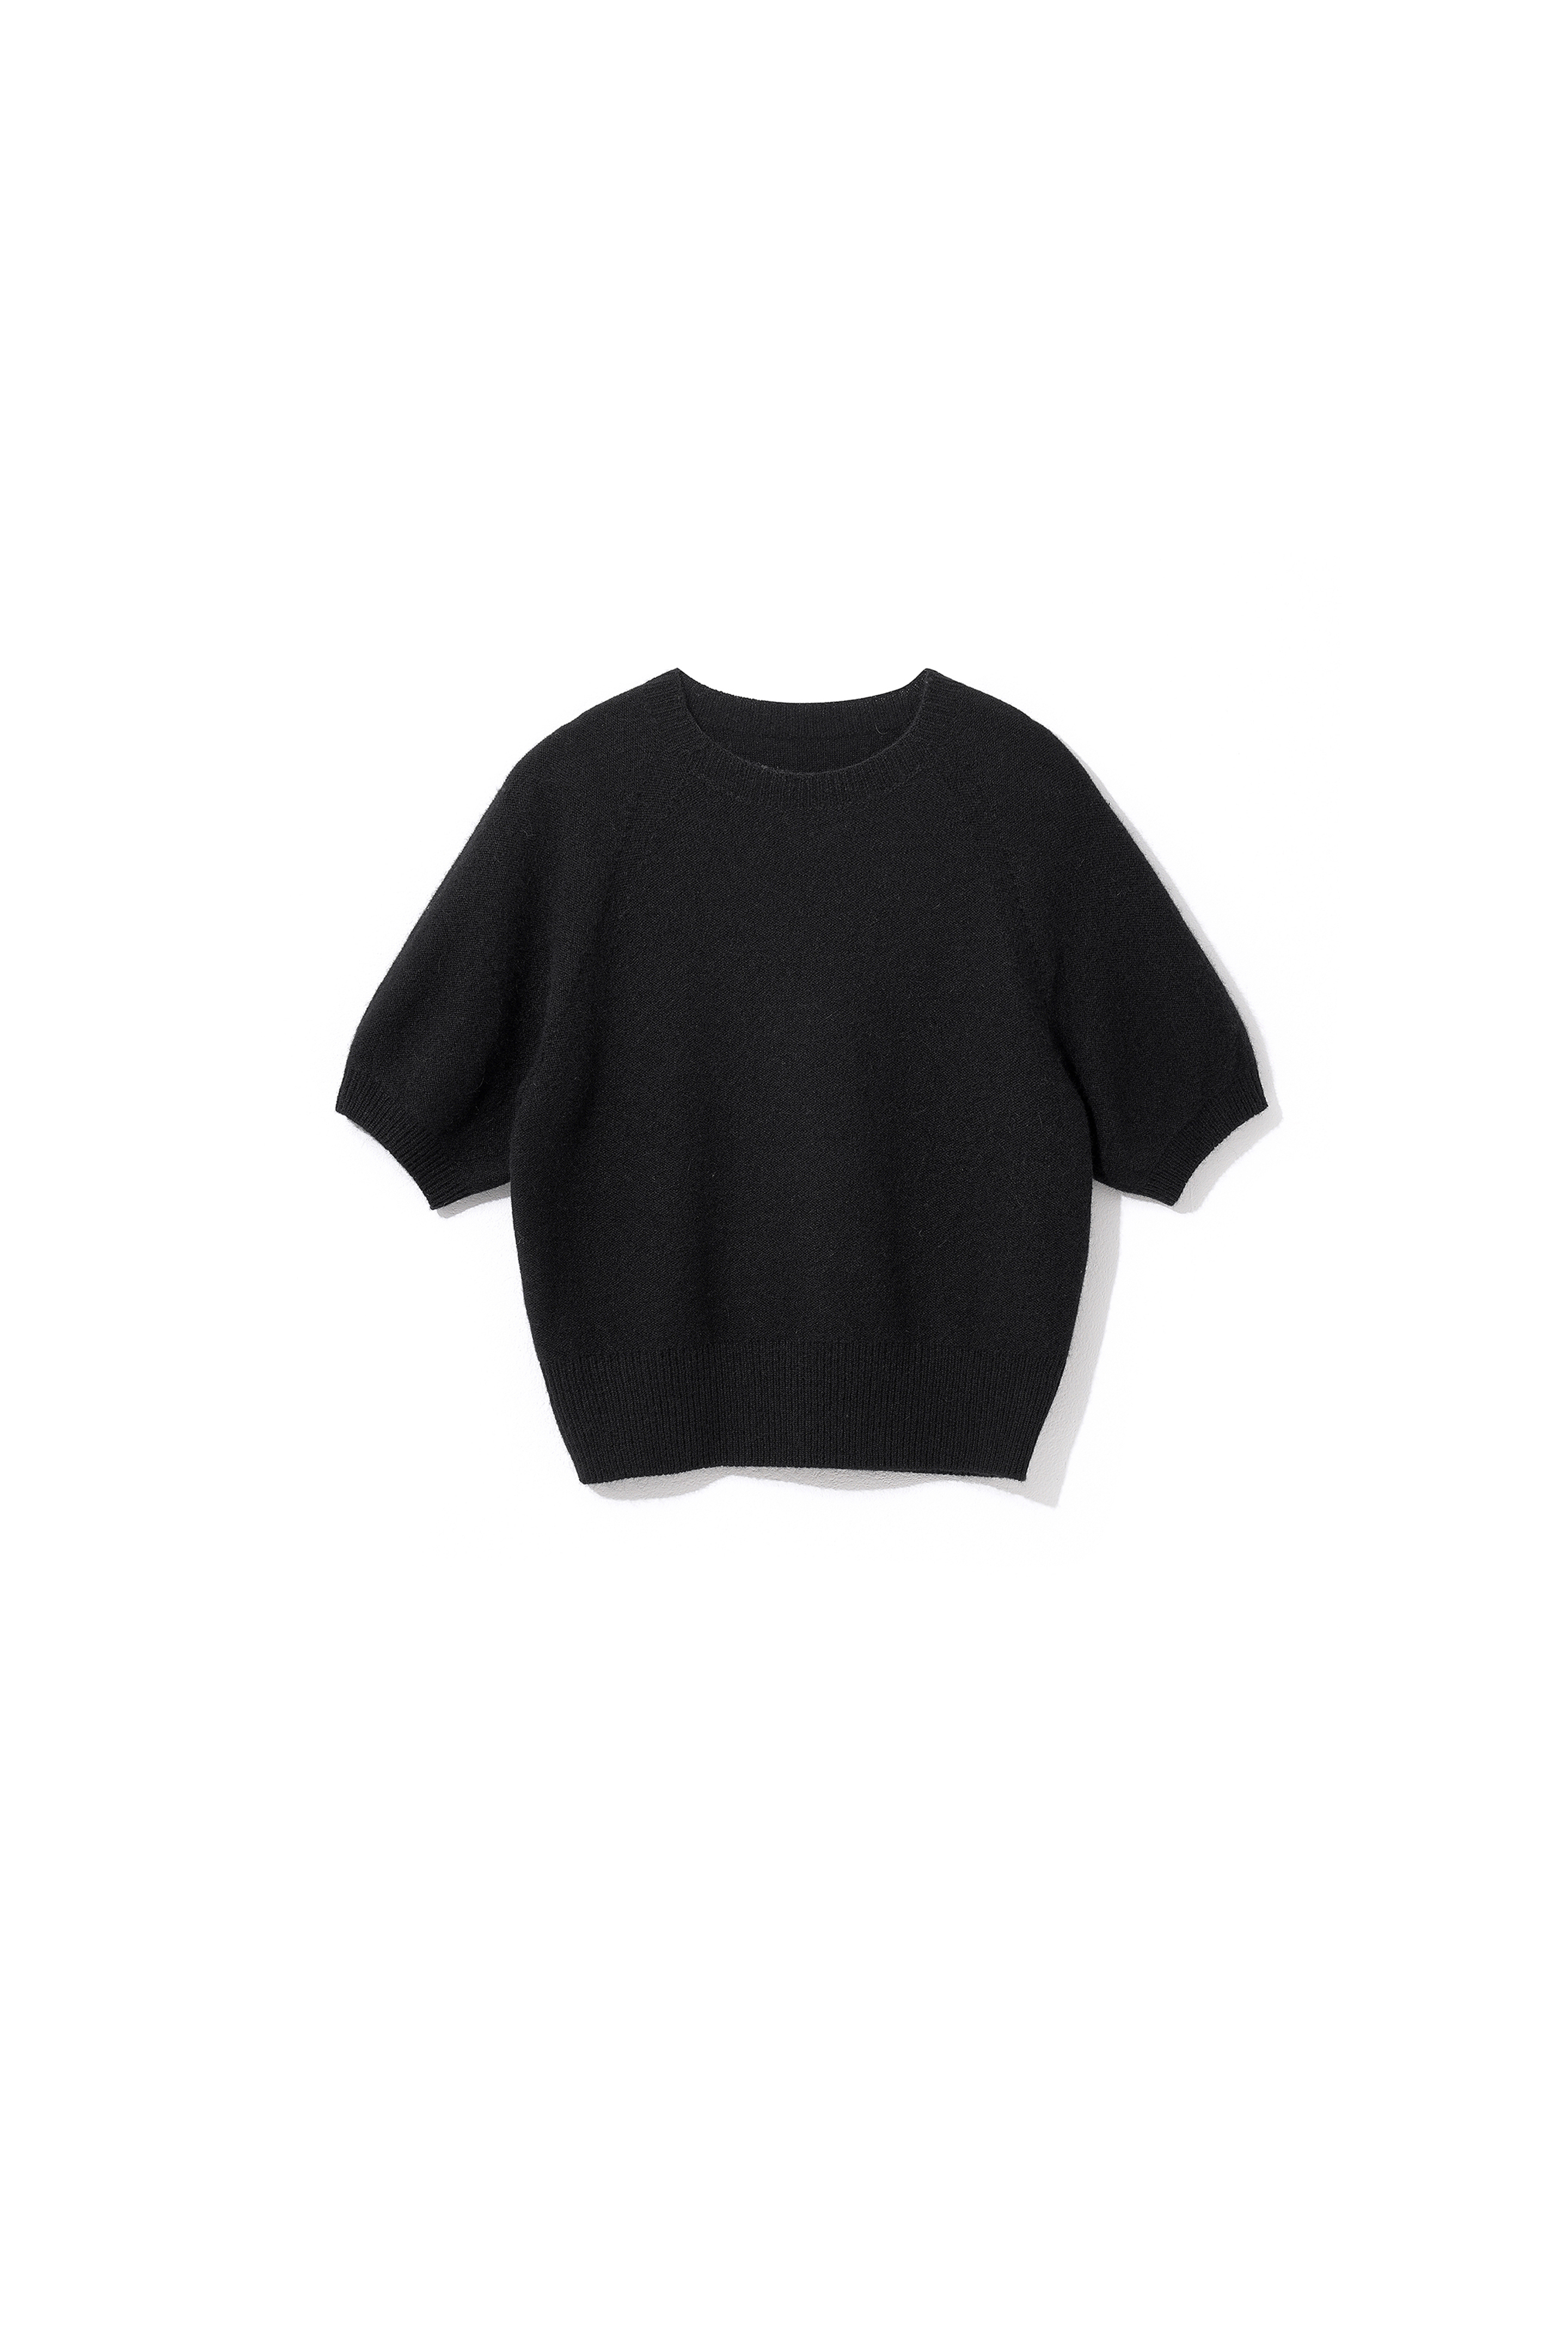 Mong Puff Sleeve Knitted P/O Black [25% OFF, 09.18(MON) - 09.22(FRI)]